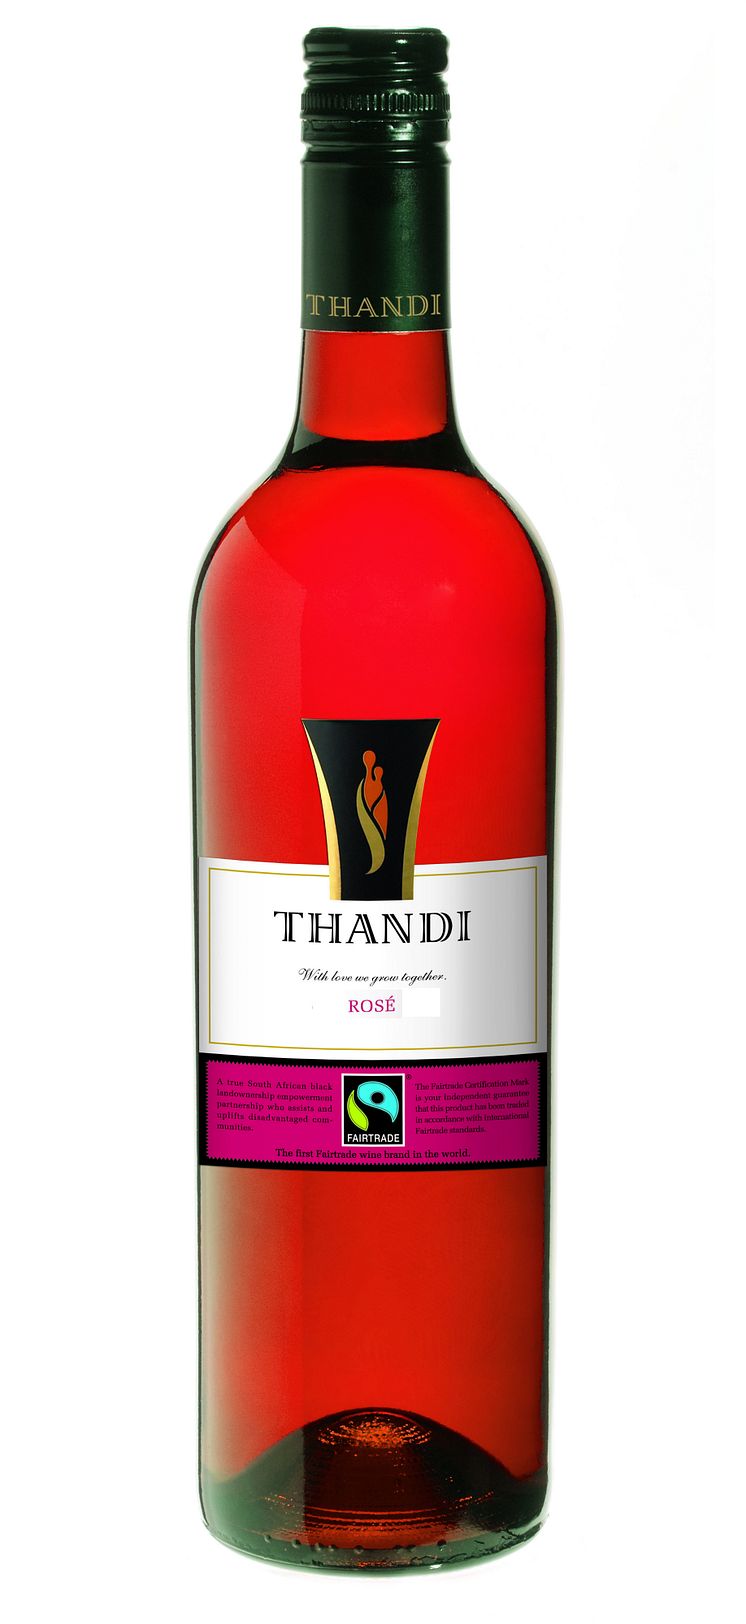 Thandi Shiraz Rosé 2013